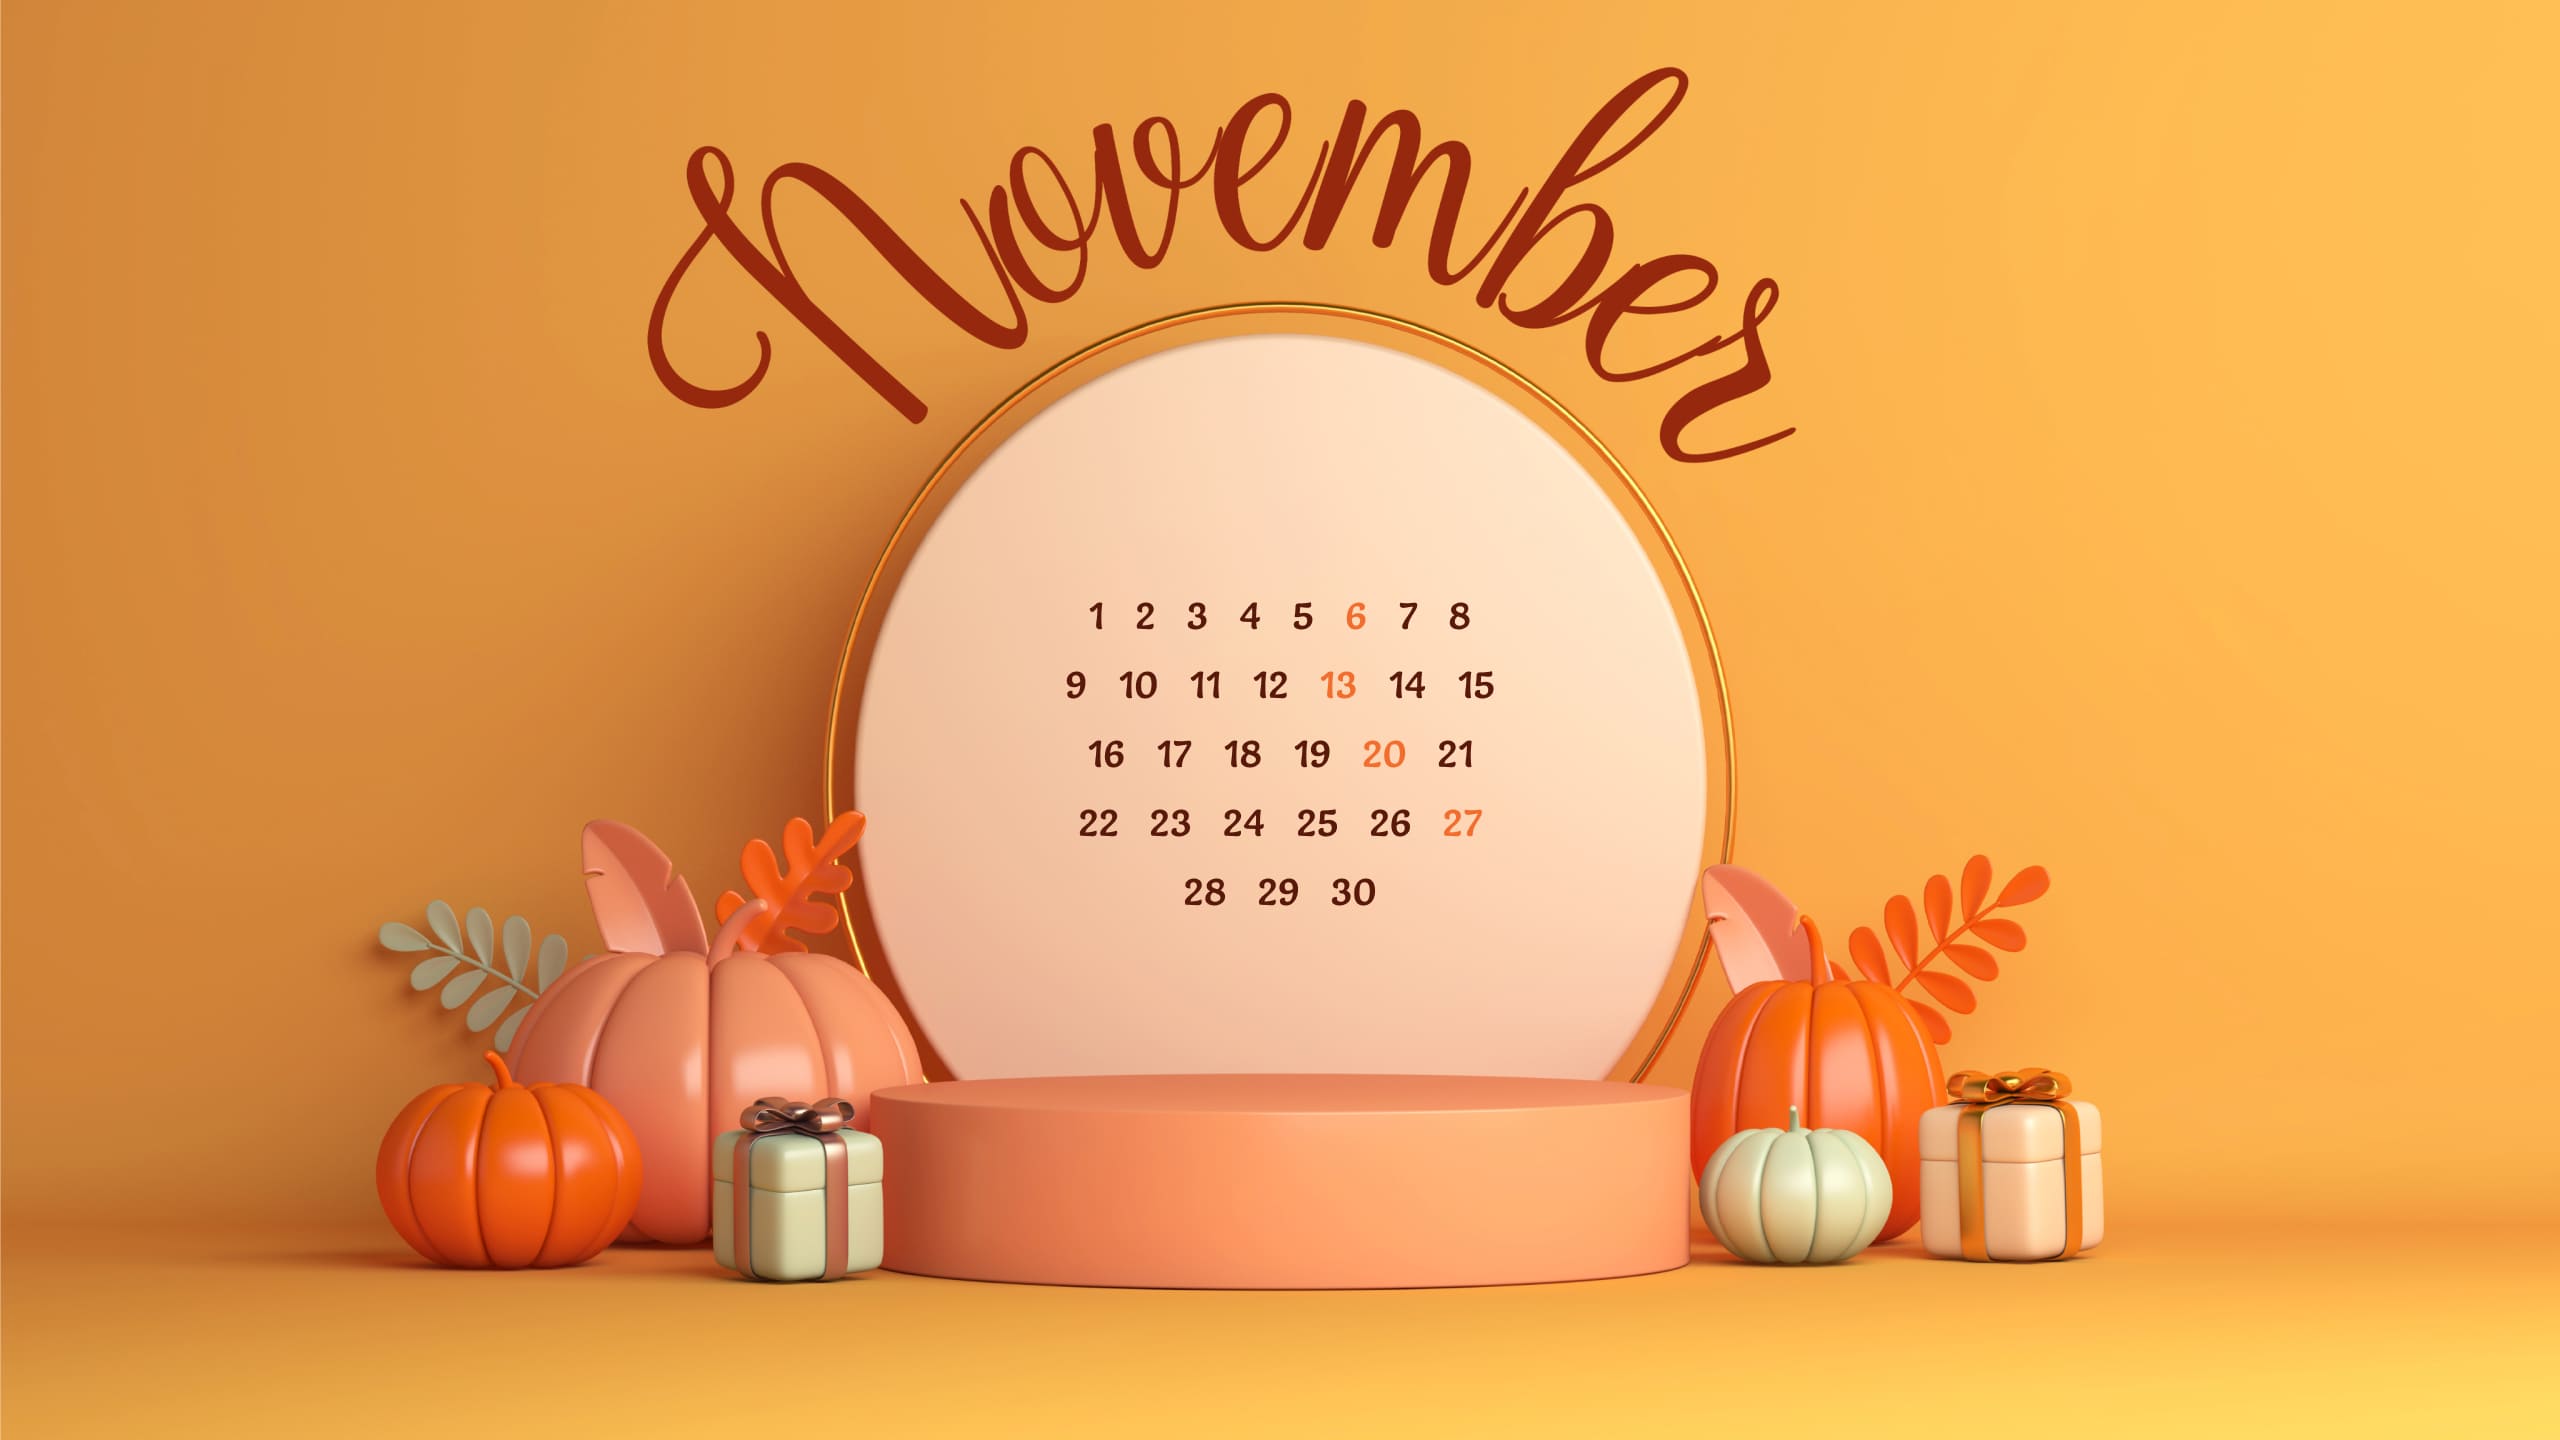 Free November calendar on the background of pumpkins.